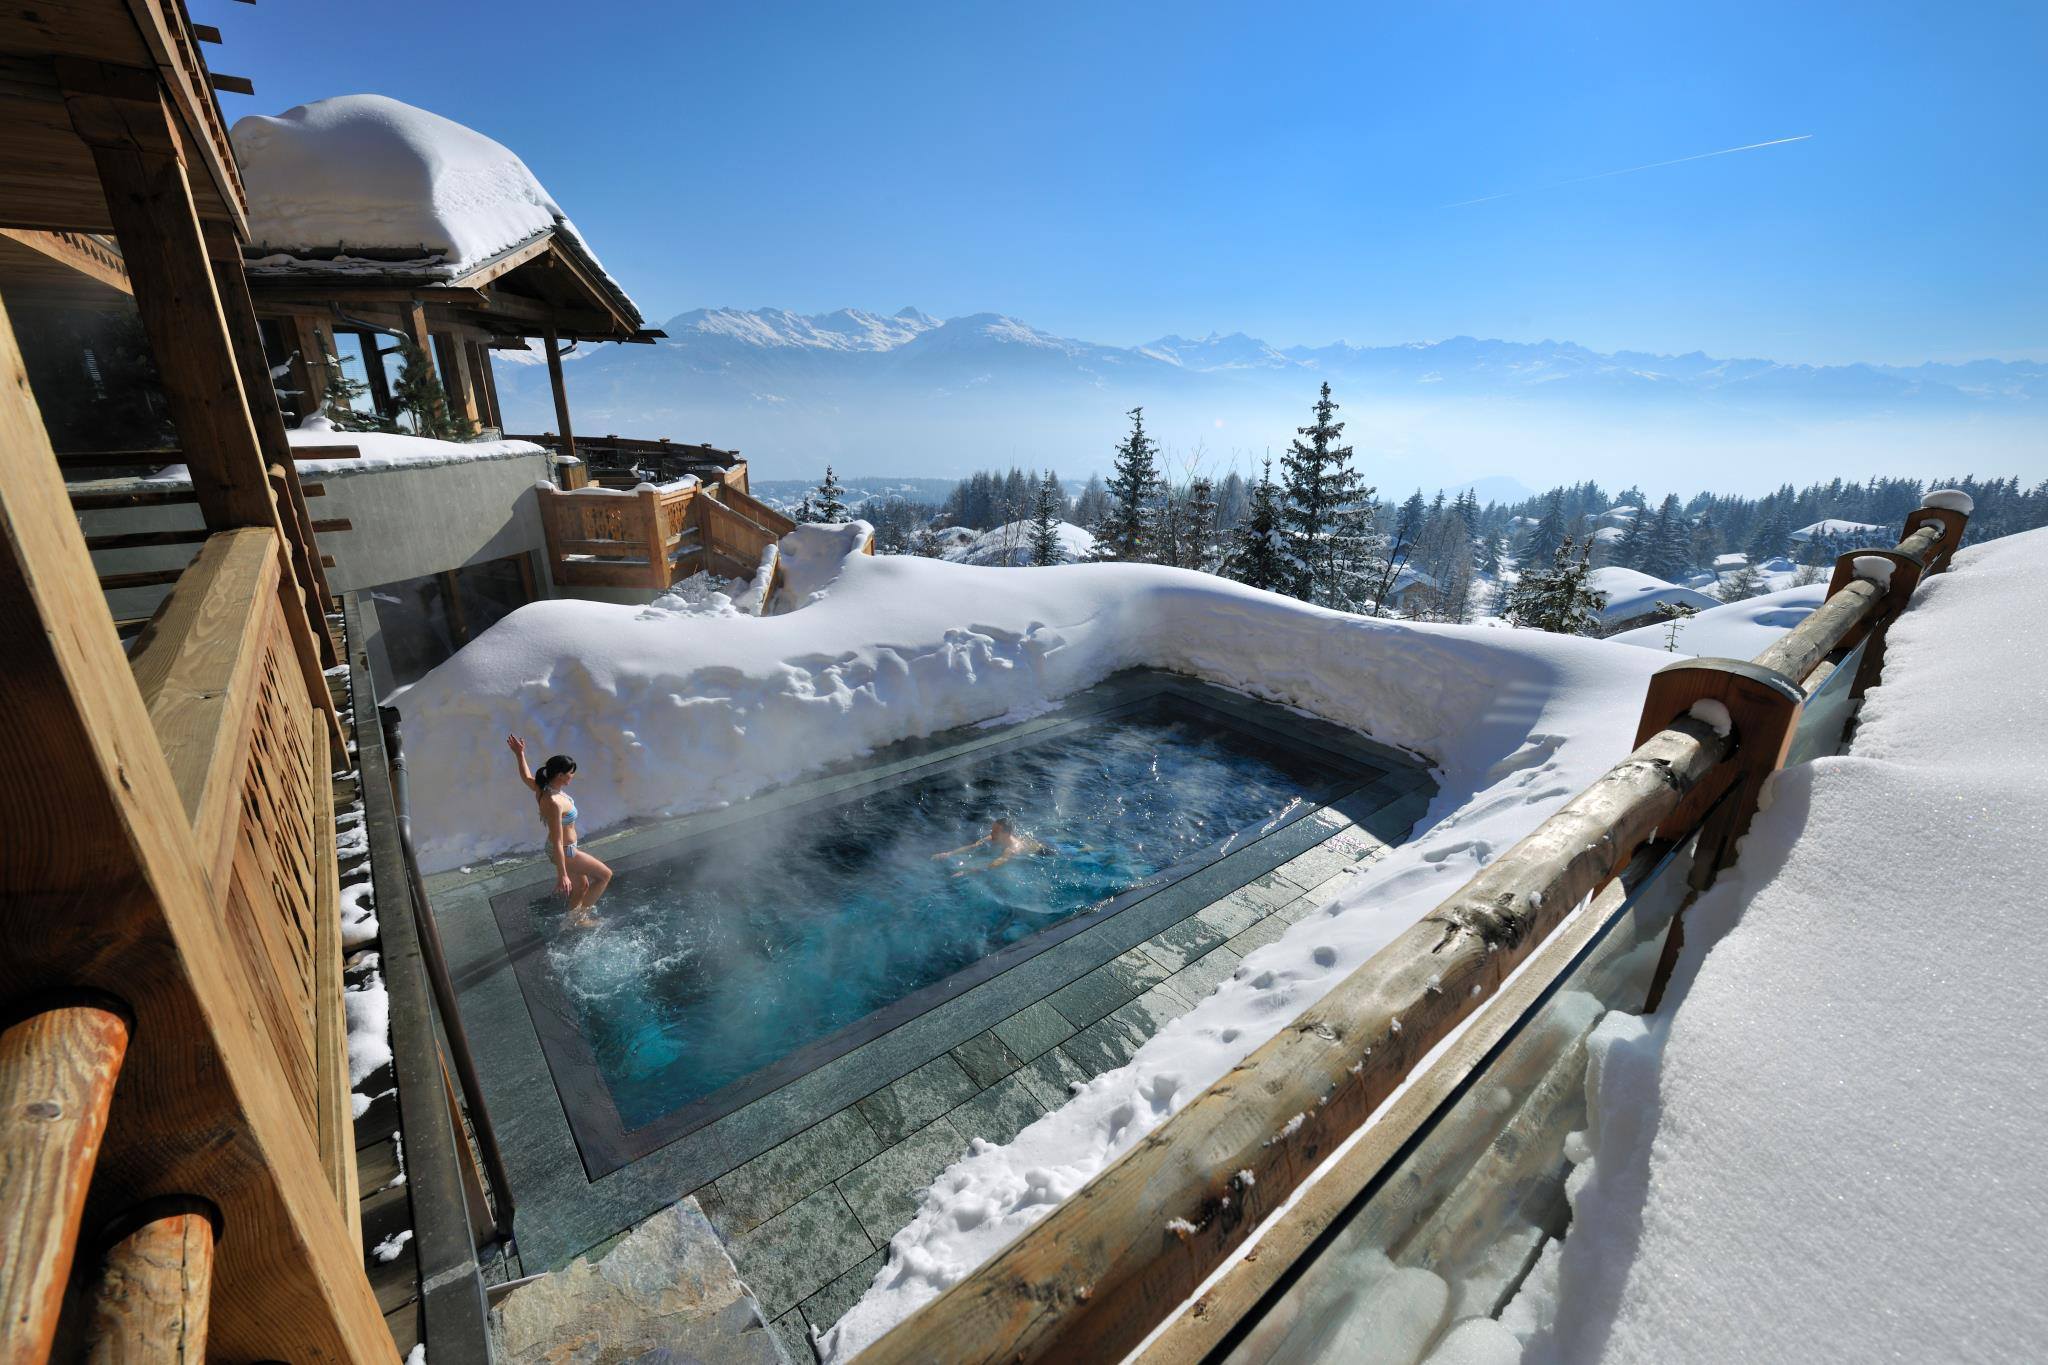 Спа тур выходного дня. Охта парк бассейн зимой. Открытый бассейн Охта парк зимой. Lecrans Hotel & Spa - кран-Монтана, Швейцария. Охта парк бассейн под открытым небом зимой.